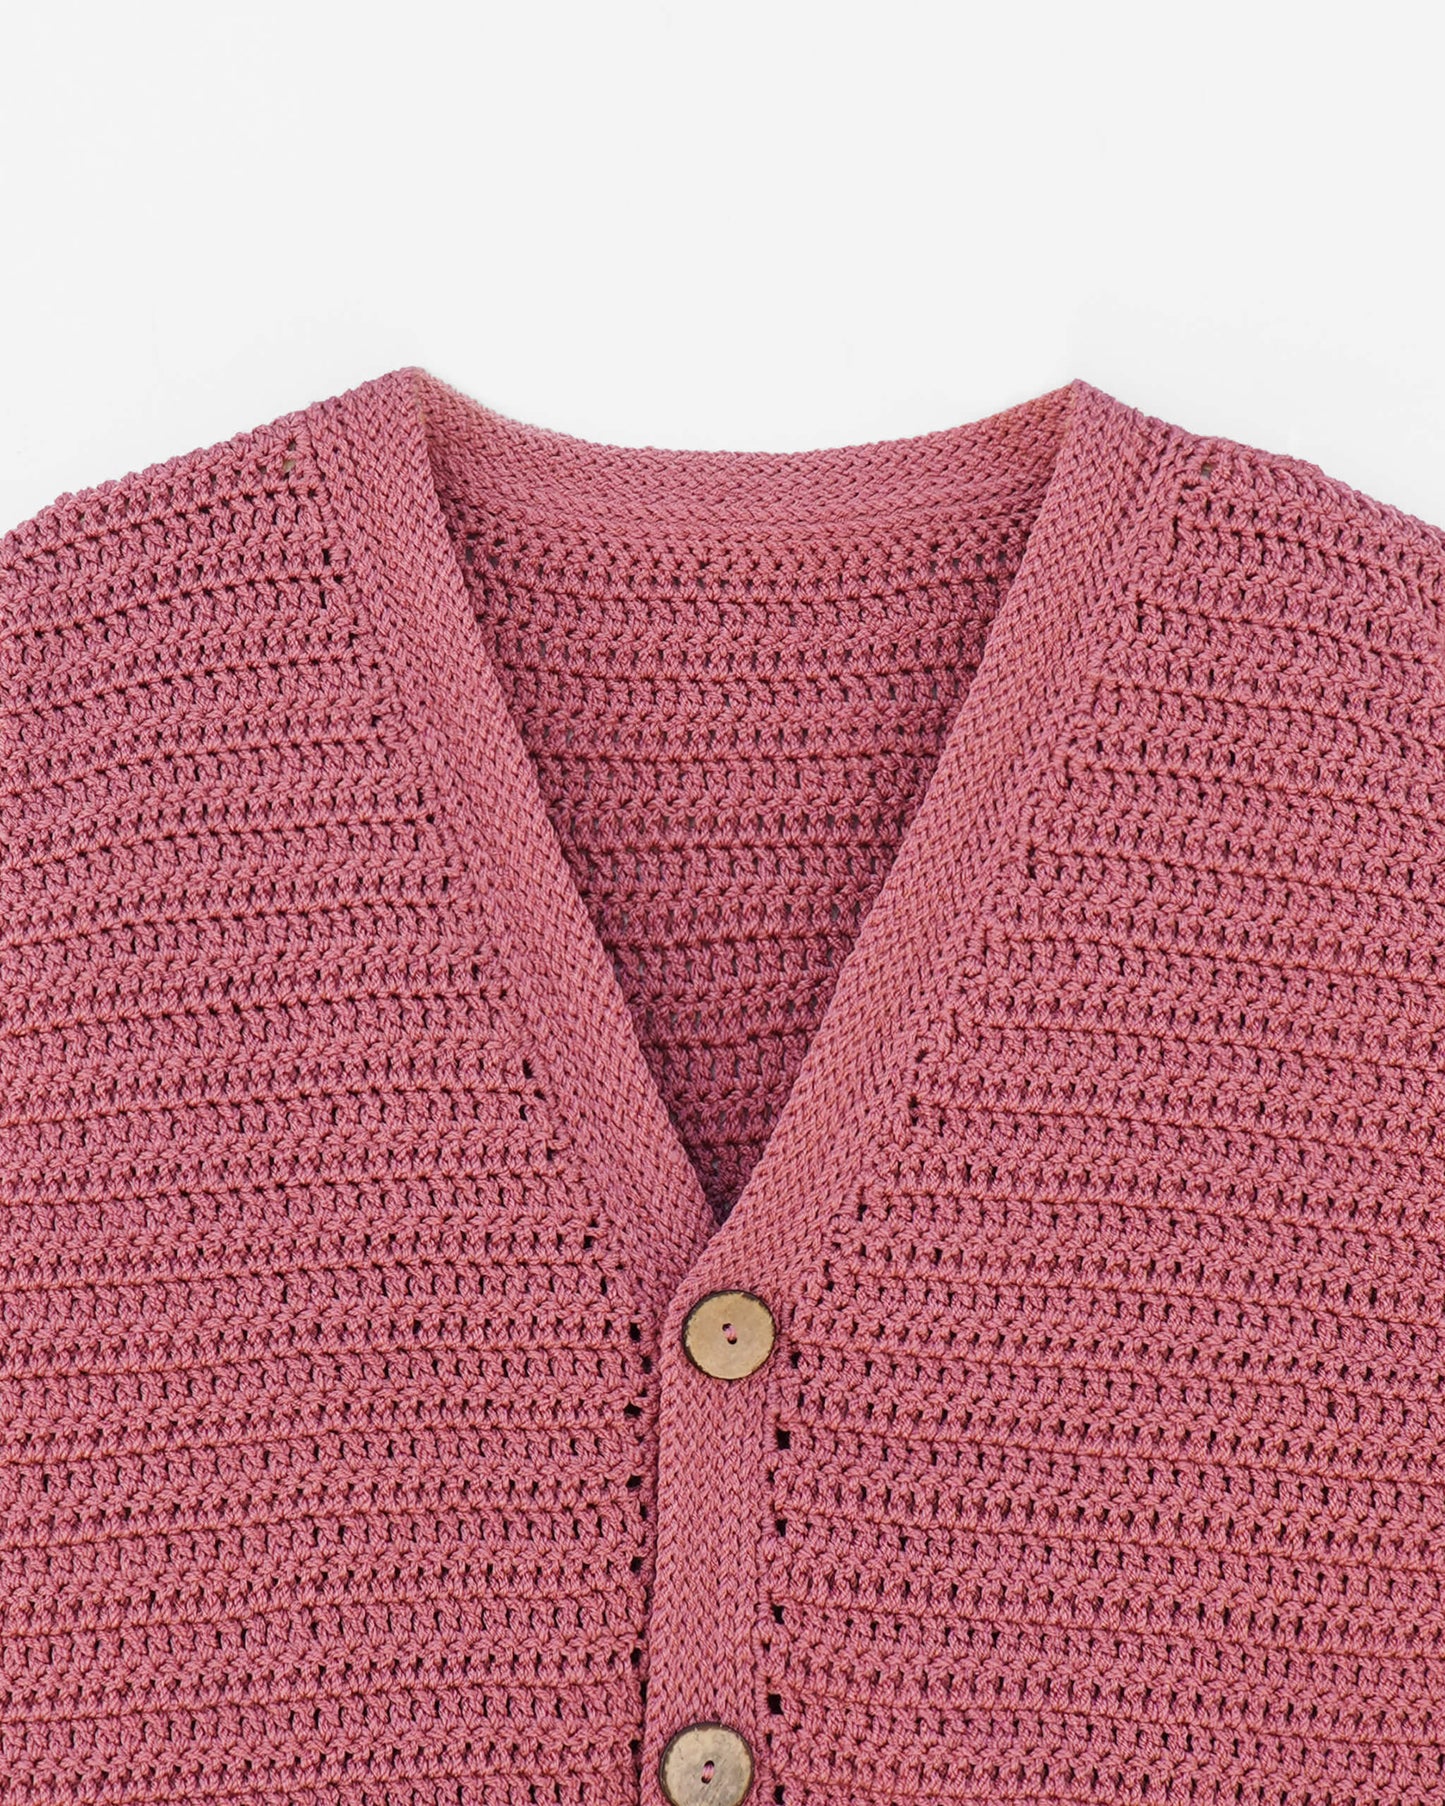 Cardigan No.30 | Easy crochet pattern